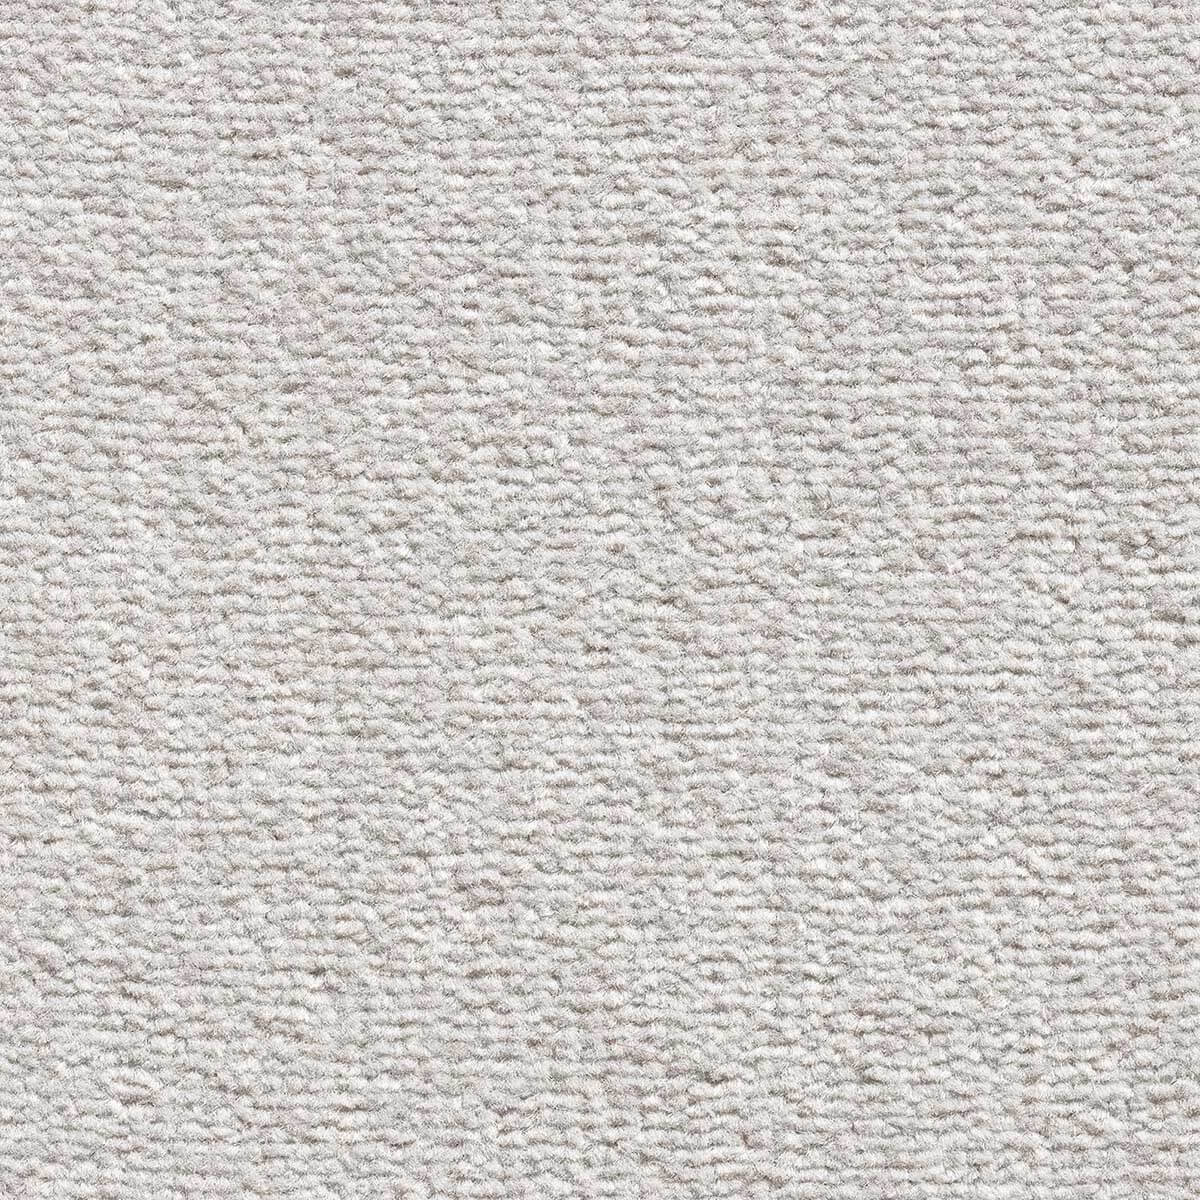 Haute Couture Twist Carpet - 5176 Chelsea White